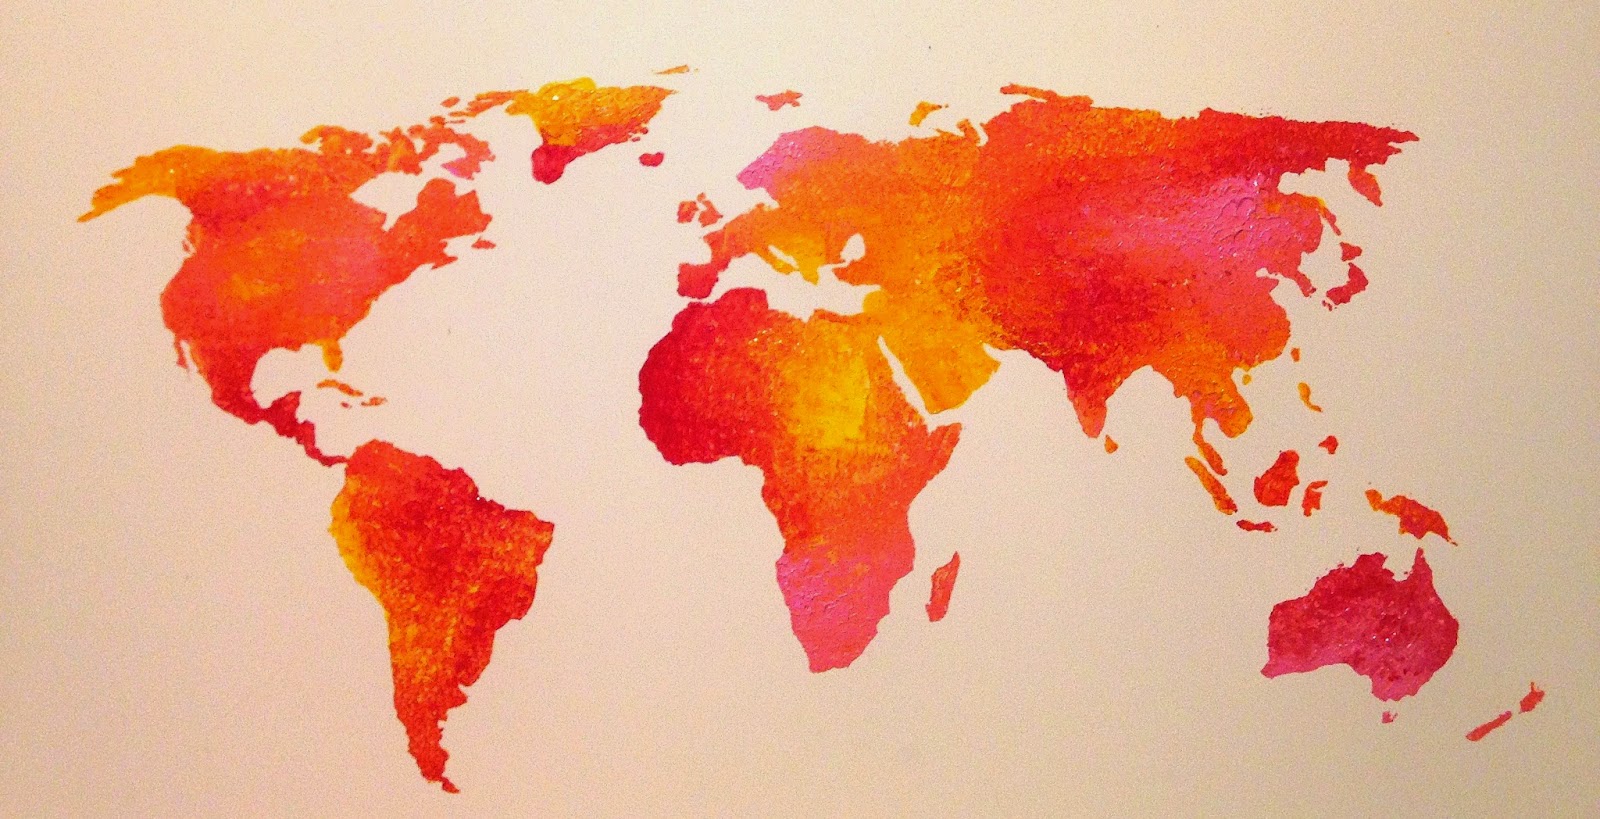 World is colours. Colorful карта. Цветные карты в руках. Оранжевая на карте.